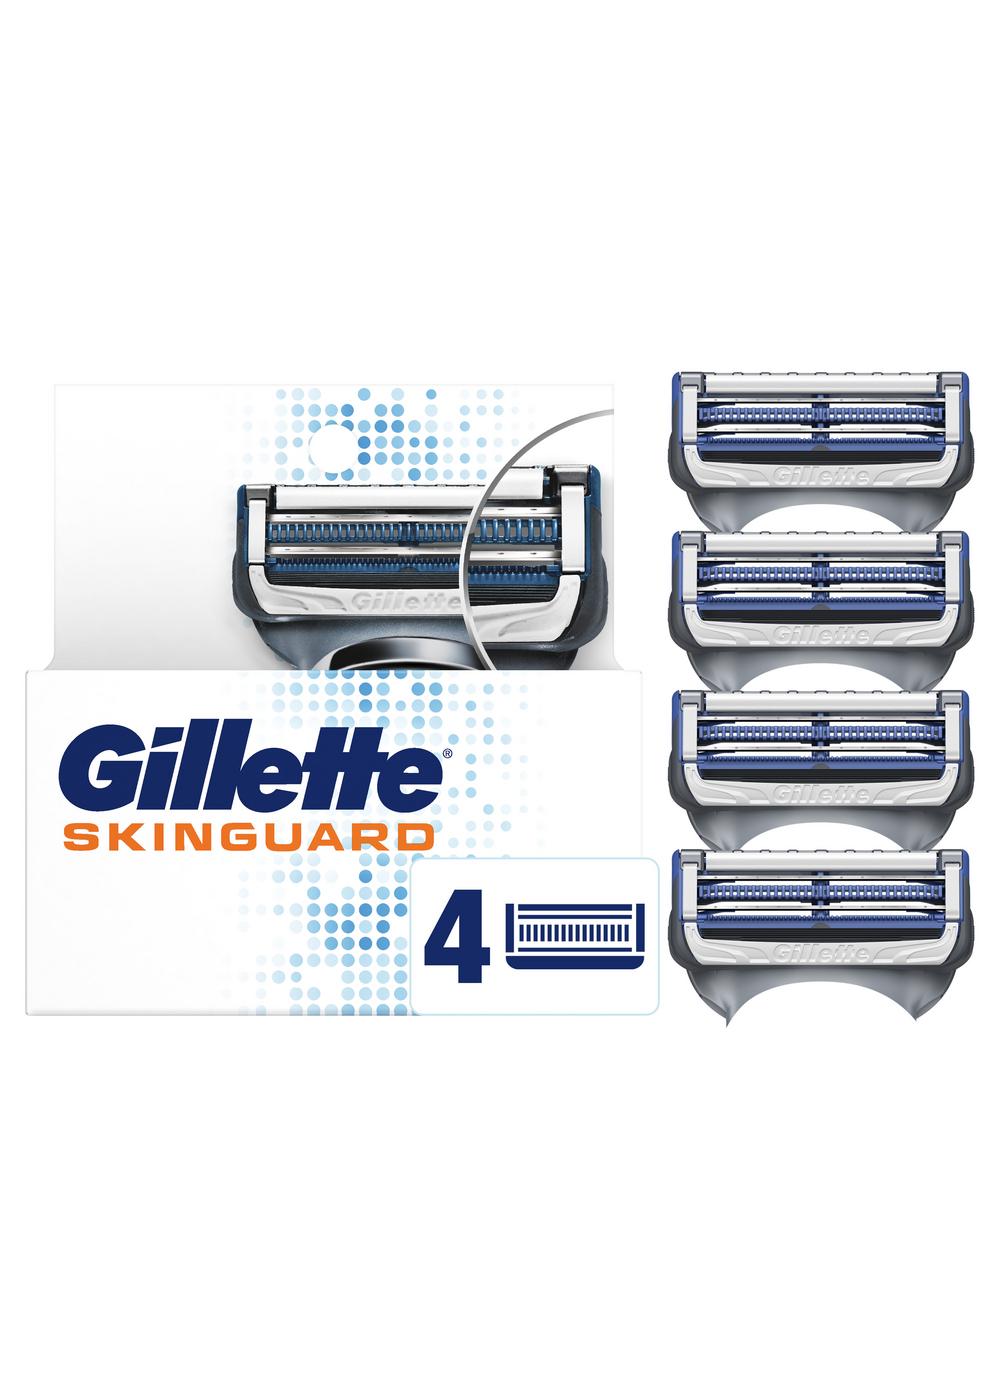 Gillette SkinGuard Razor Blade Refills; image 7 of 11